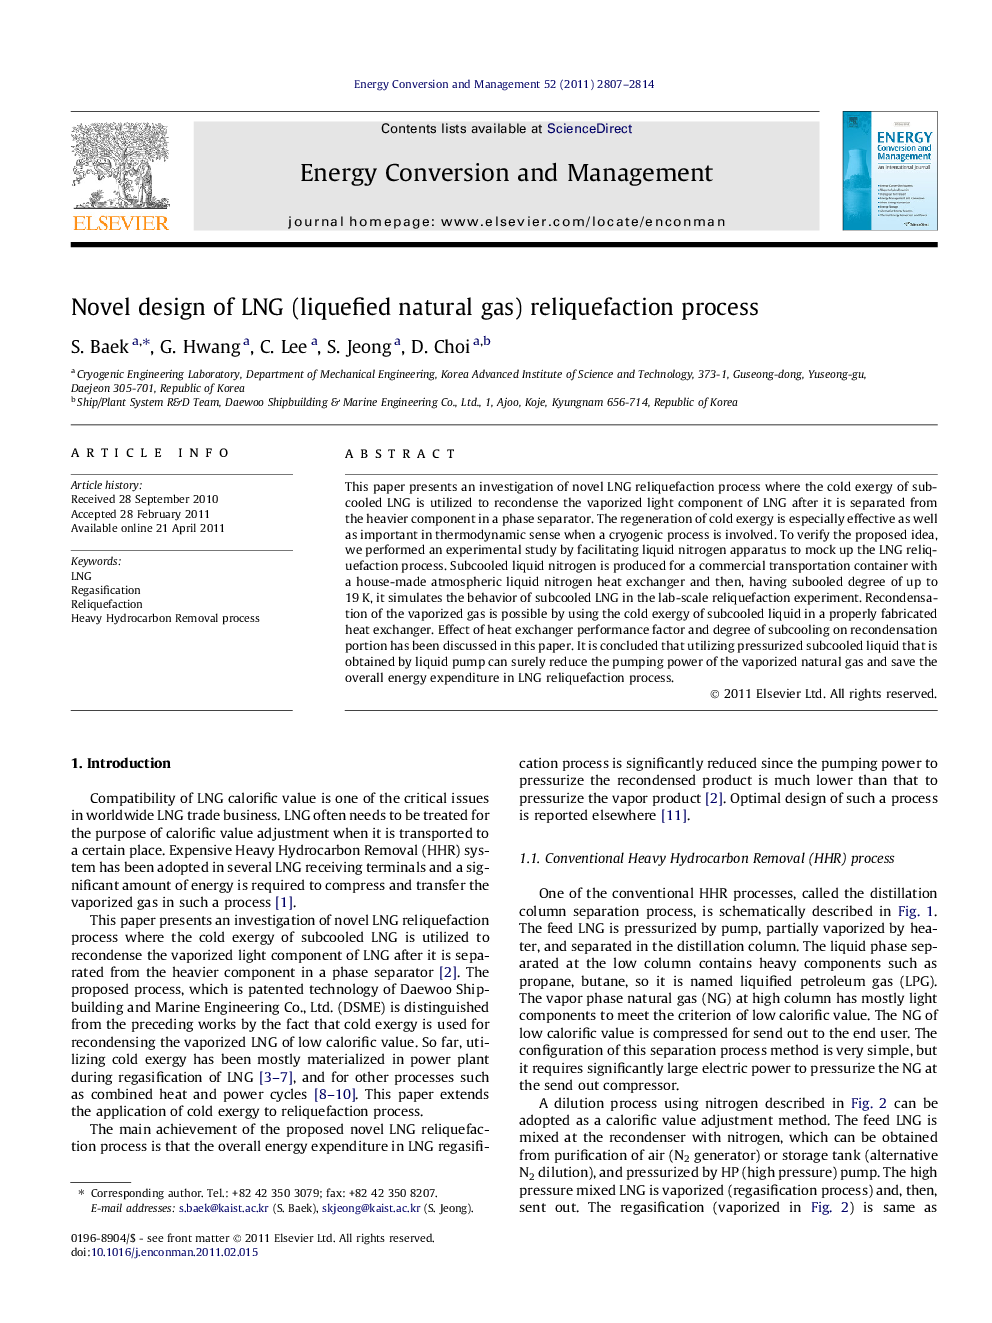 Novel design of LNG (liquefied natural gas) reliquefaction process